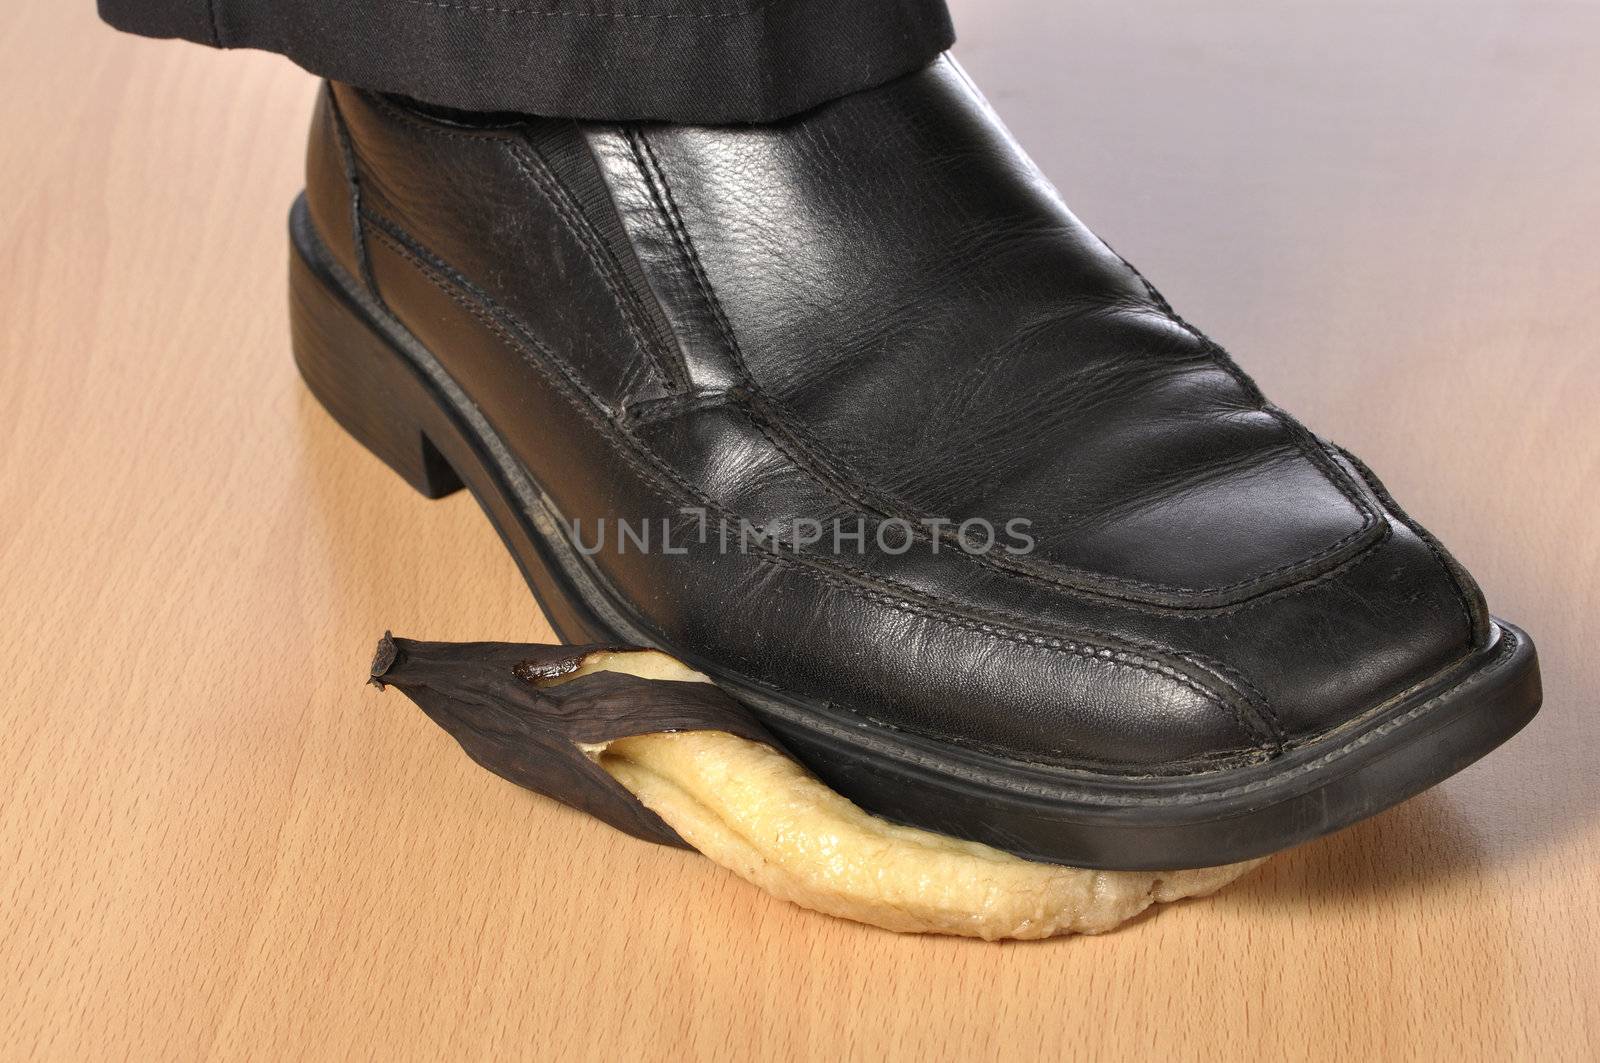 Closeup of man's black shoe stepping on over ripe banana